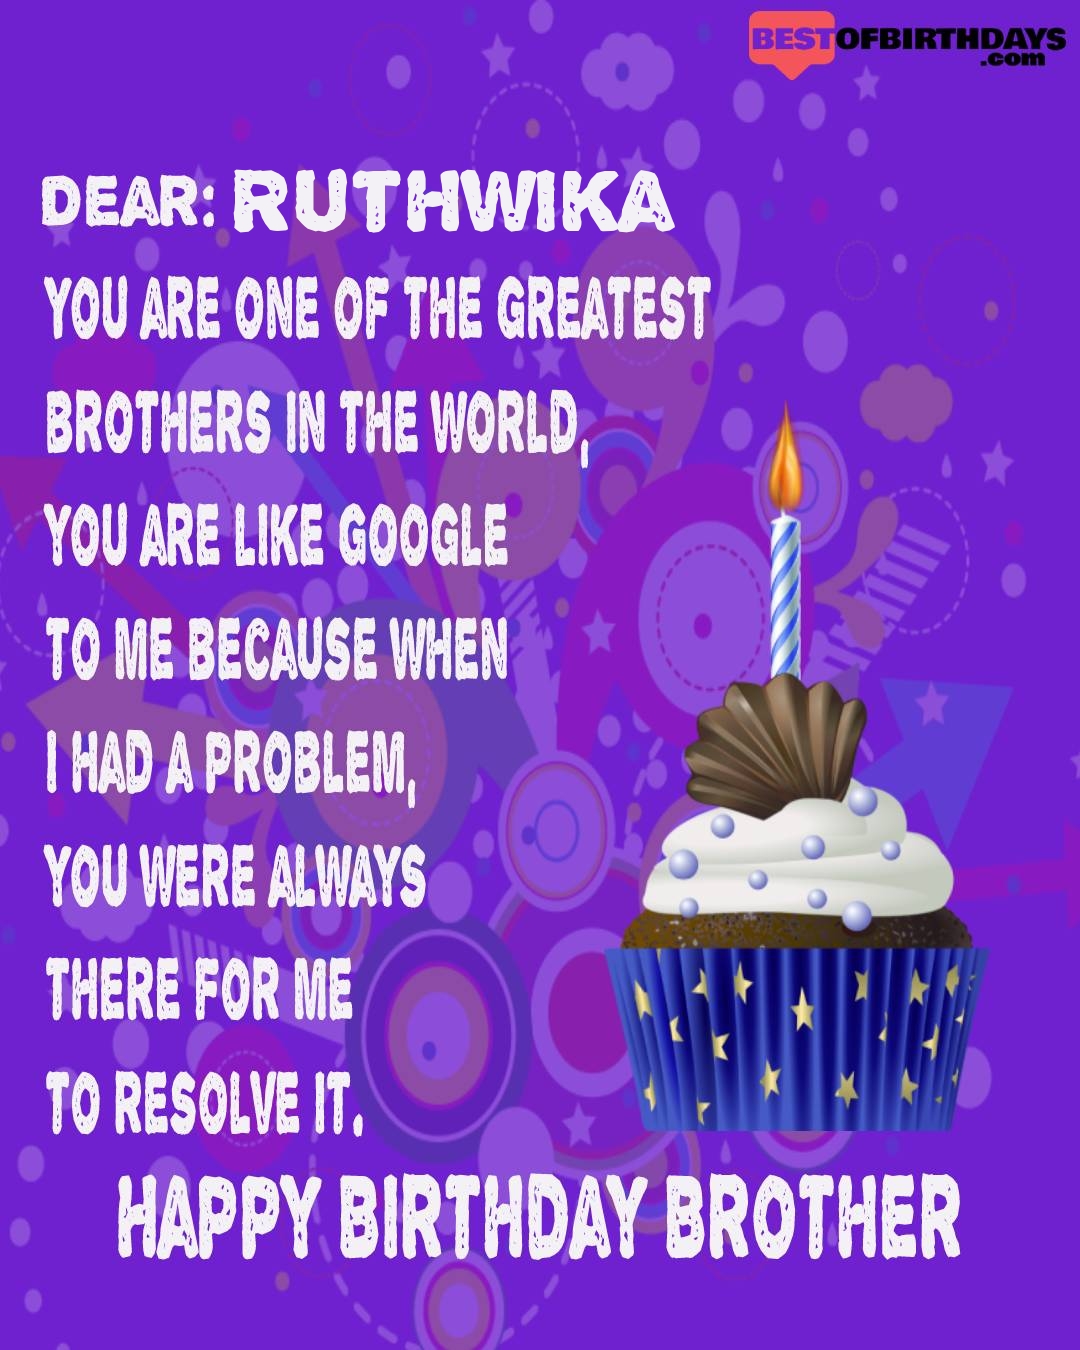 Happy birthday ruthwika bhai brother bro